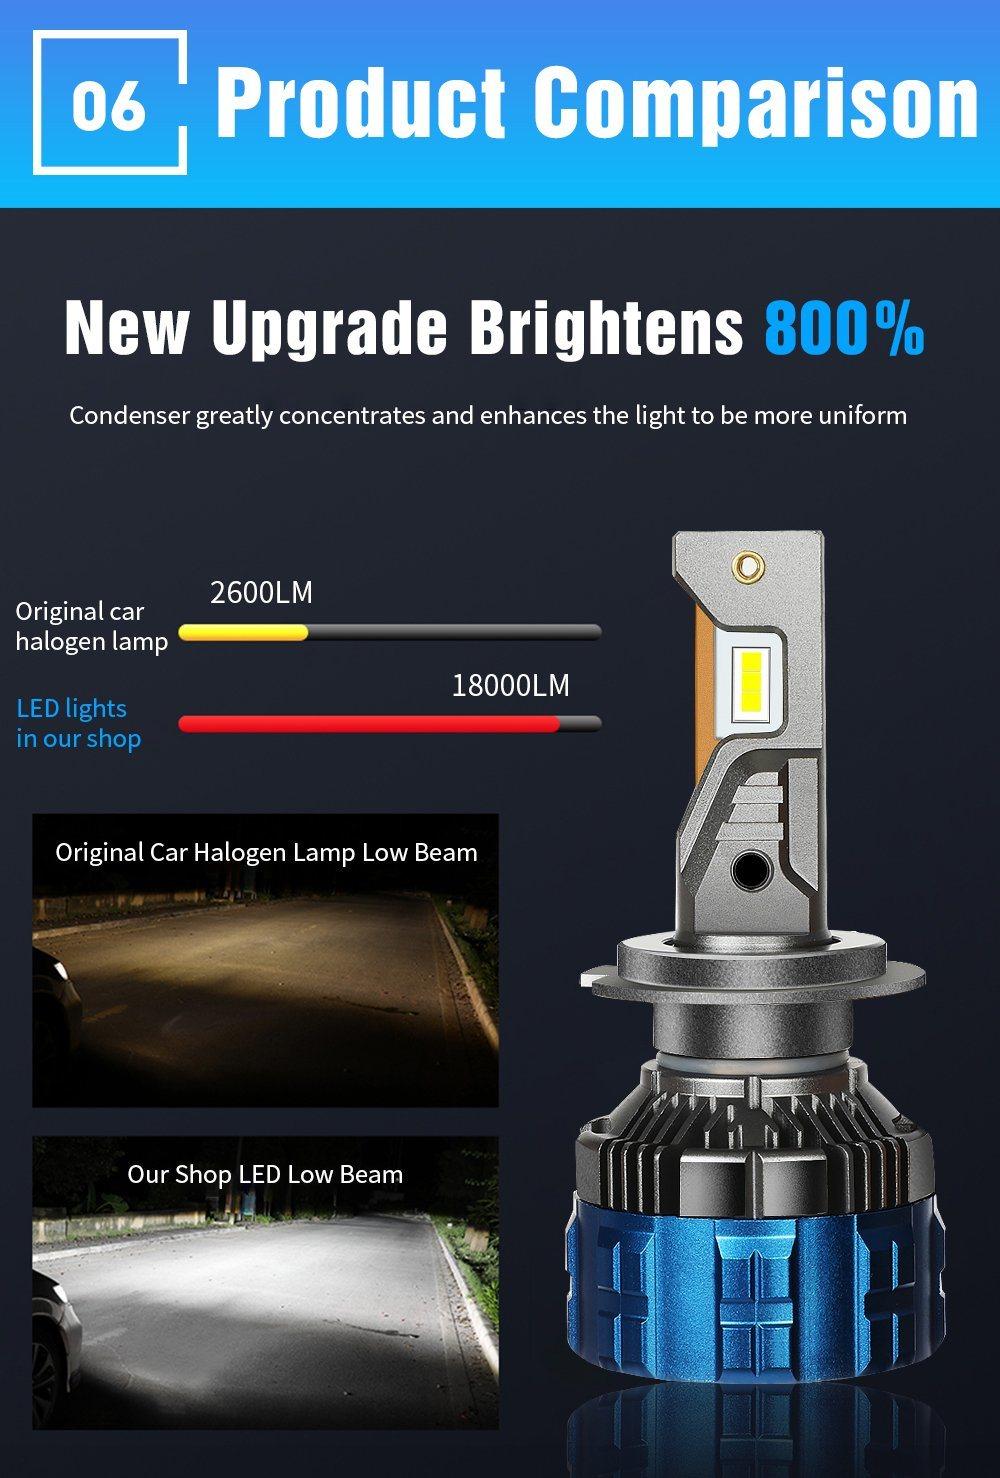 Hot Sales 110W 22000lm F8 LED Headlight H1 H7 H8 H9 H11 9005 9006 9012 for Lighting System